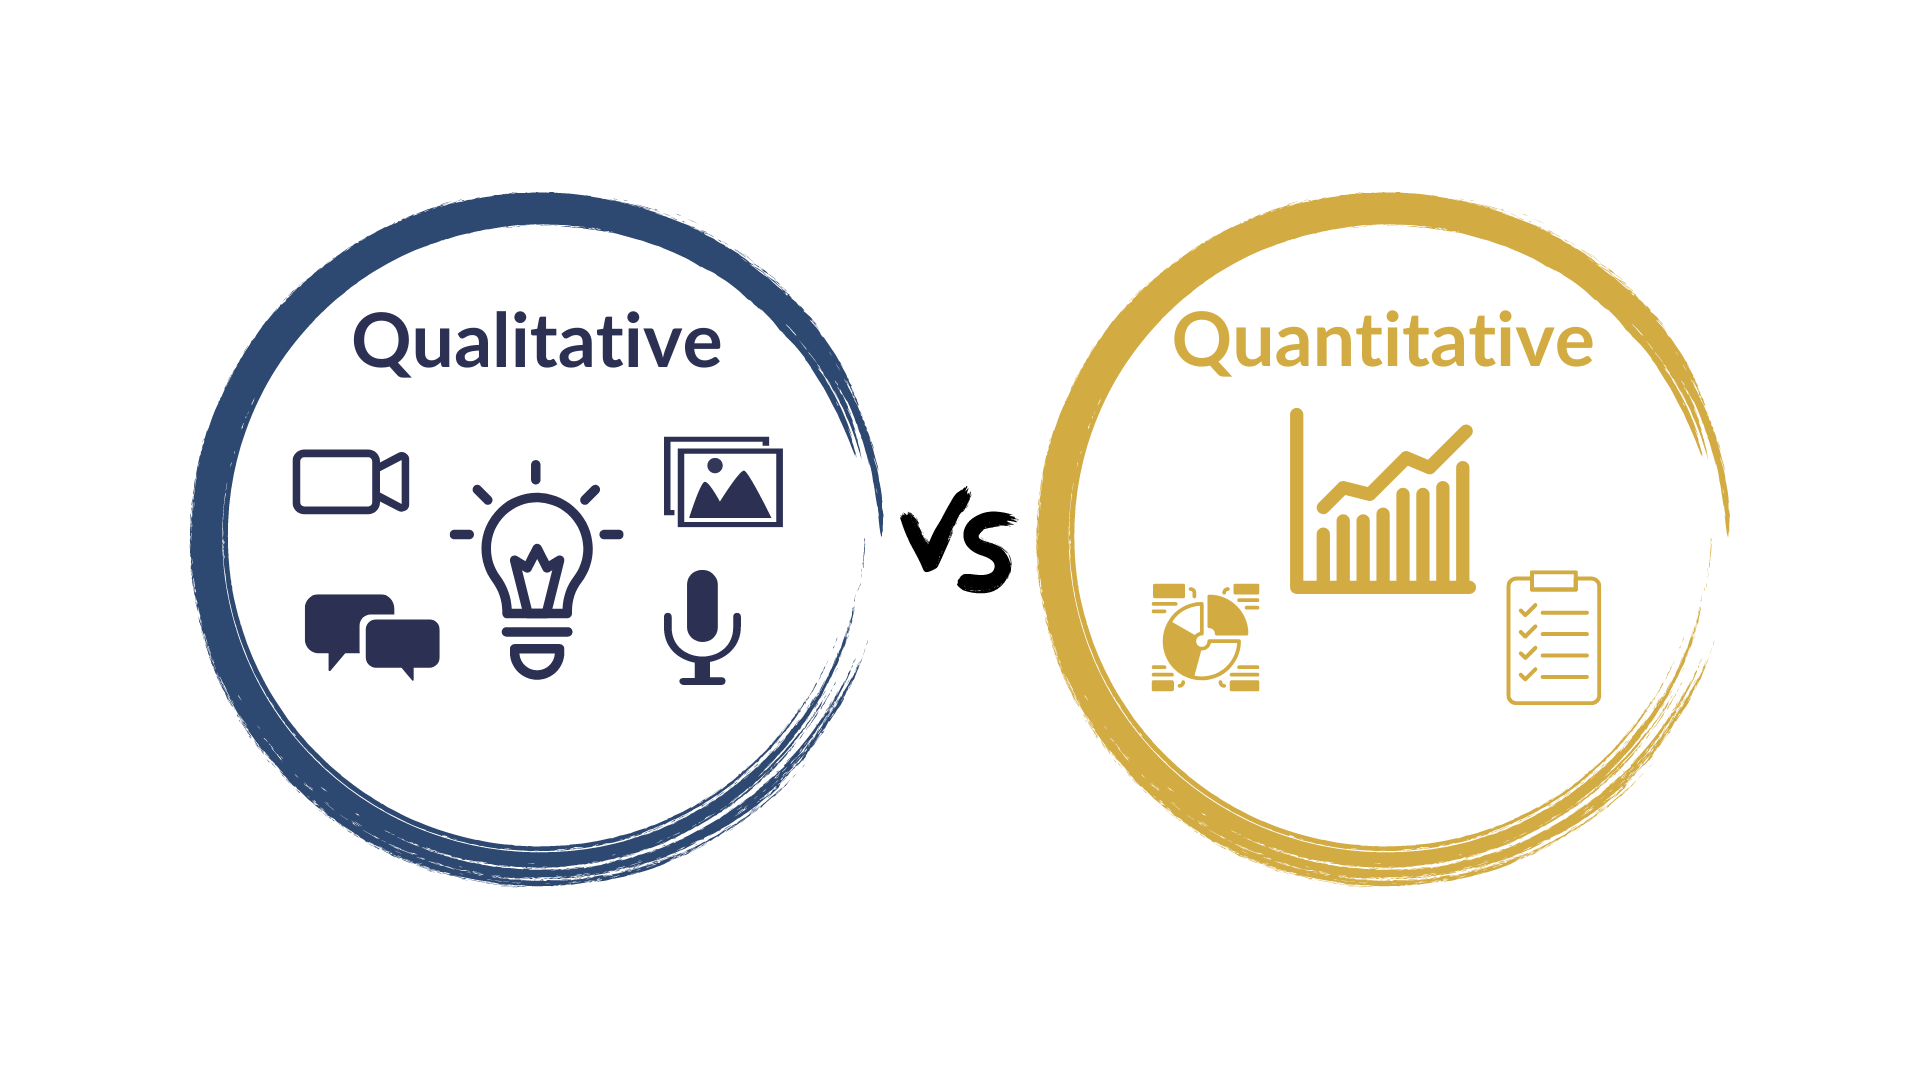 Qualitative vs quantitative